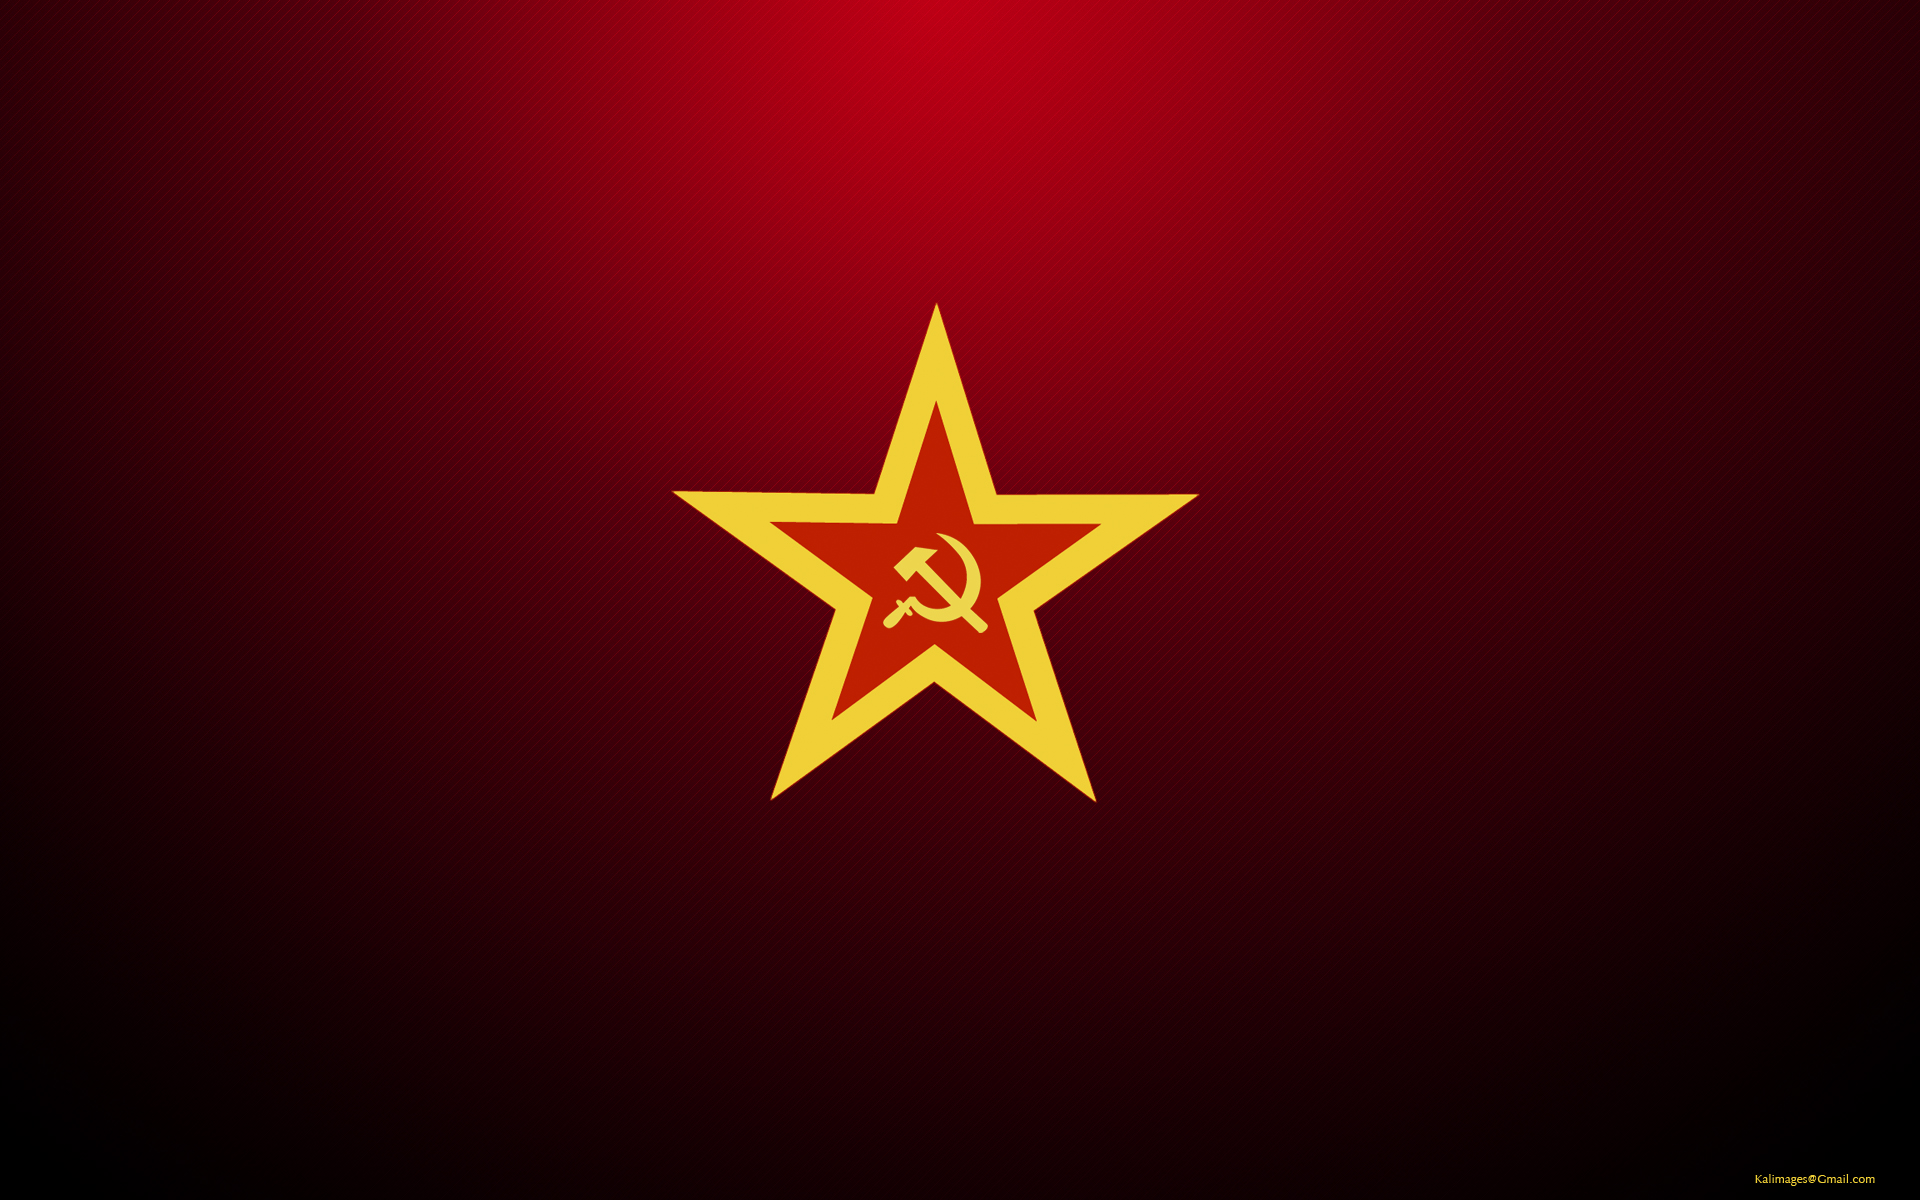 Communist - desktop wallpaper